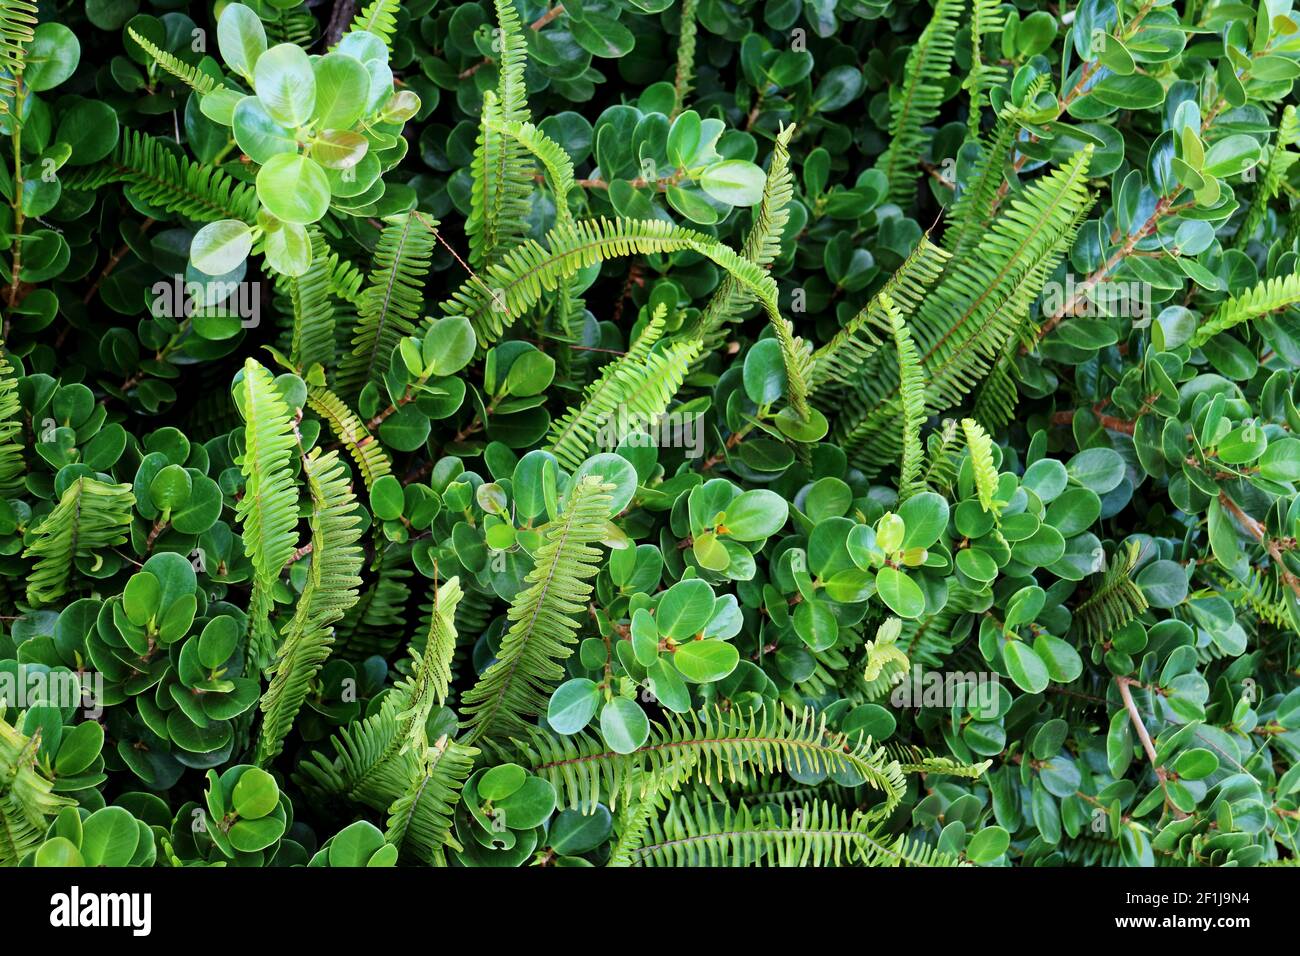 Australian green plants, ferns and foliage Stock Photo